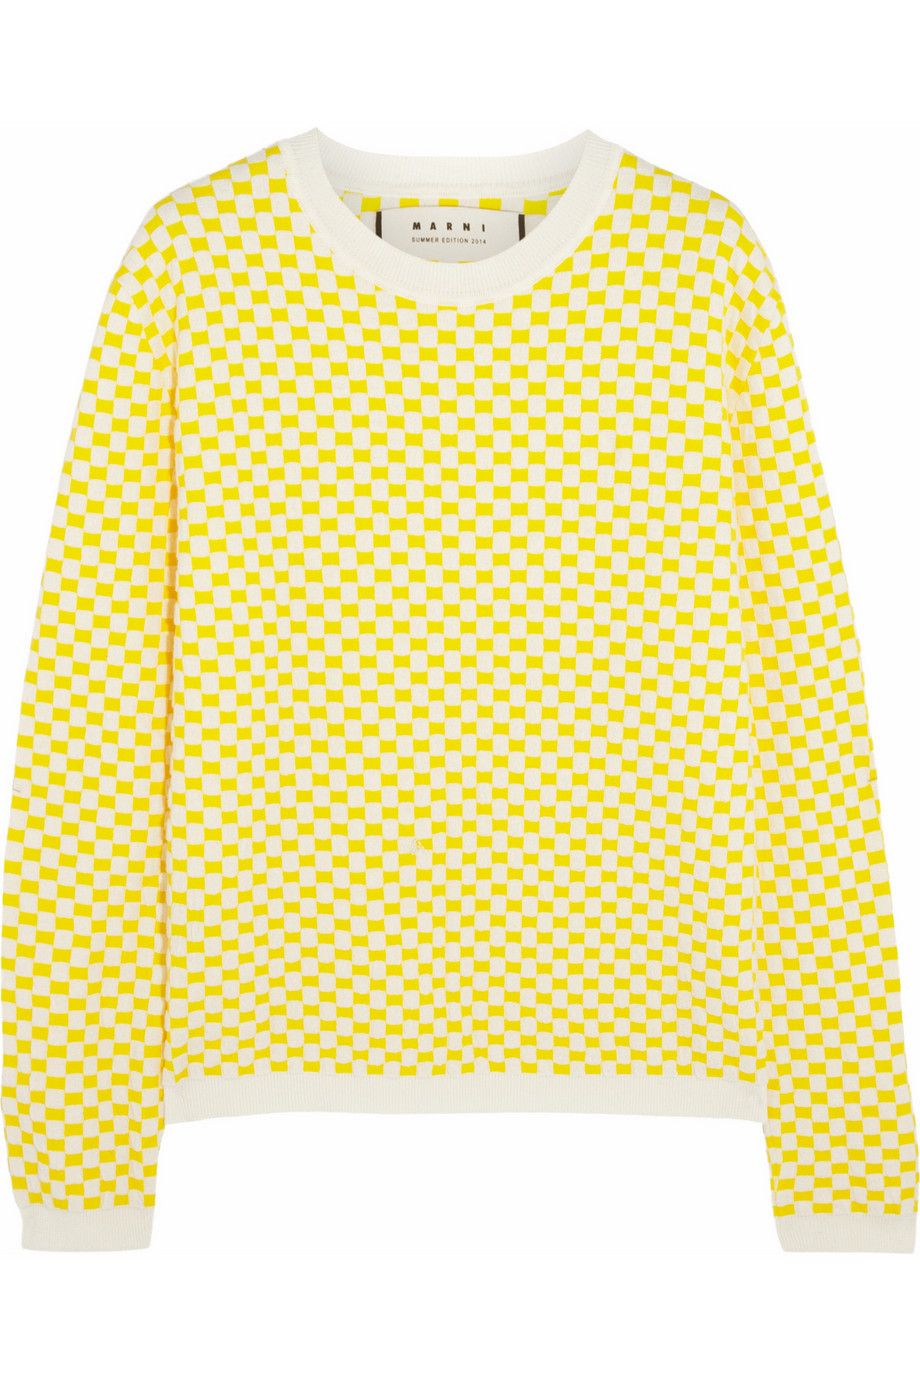 Product, Yellow, Sleeve, Green, Pattern, White, Orange, Amber, Aqua, Baby & toddler clothing, 